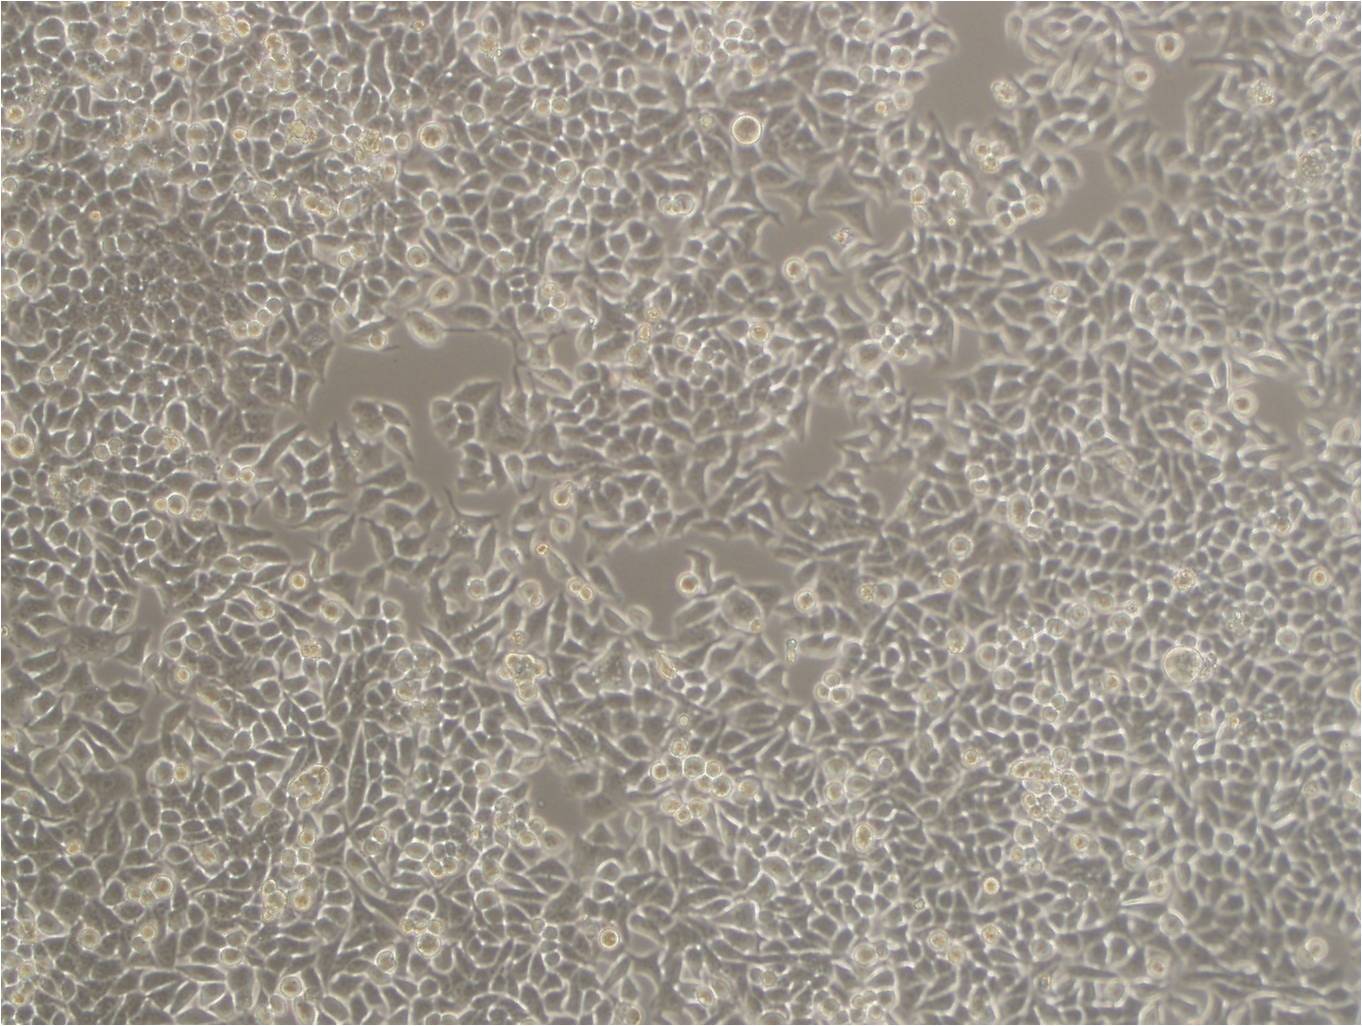 RT-112 epithelioid cells人膀胱癌细胞系,RT-112 epithelioid cells